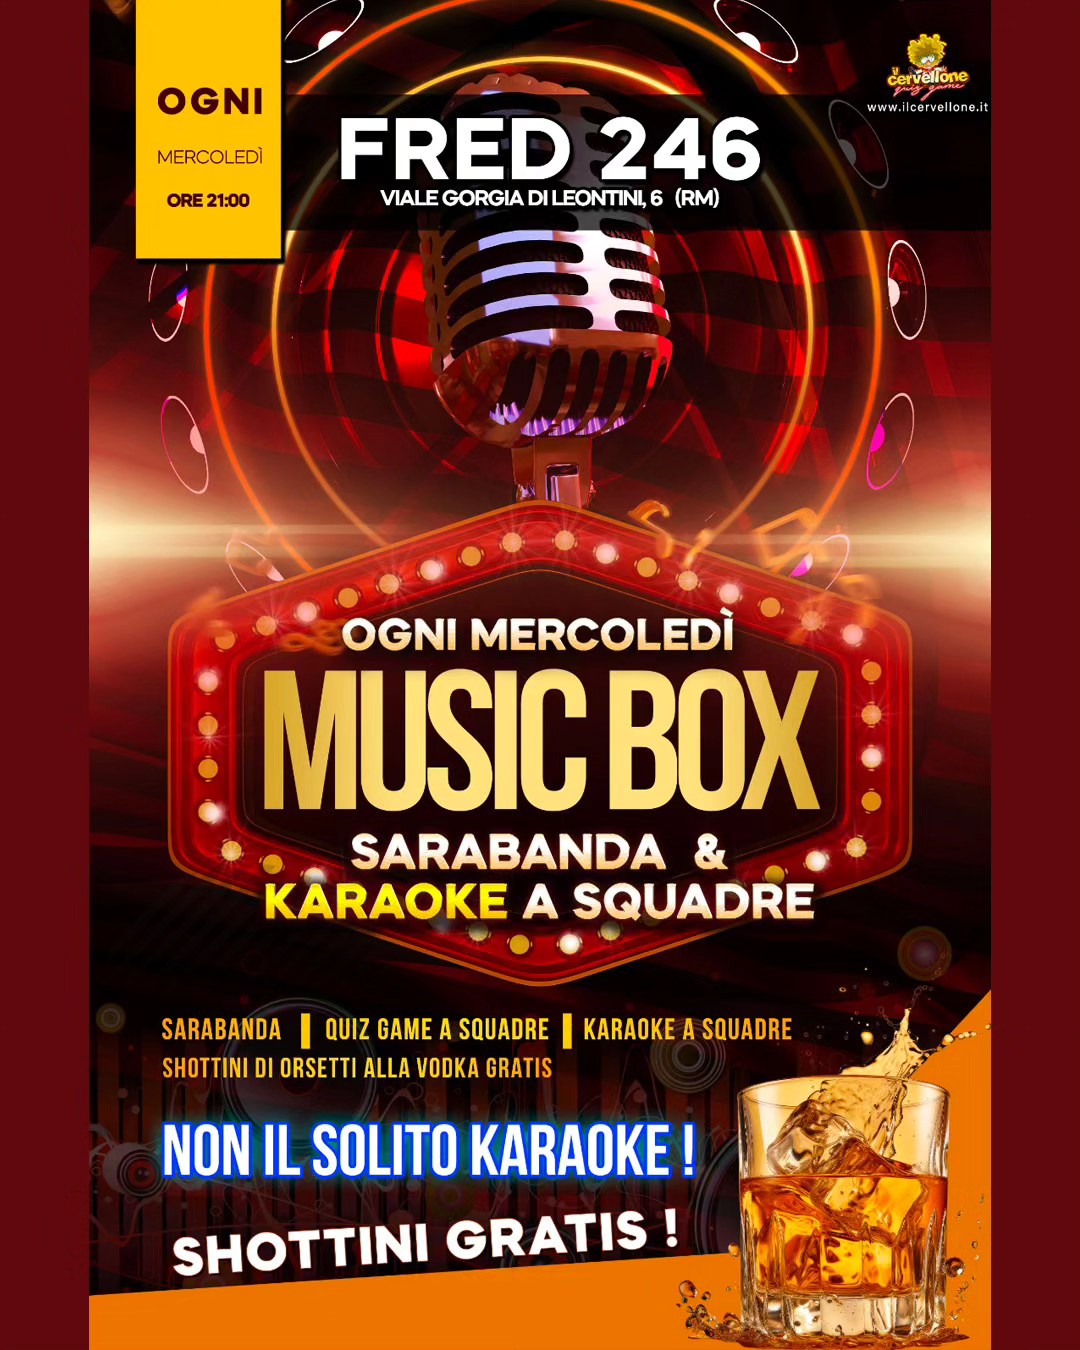 Tutti i mercoledì MUSIC BOX!Sarabanda, karaoke, quiz game… e tanto altro!Chi…